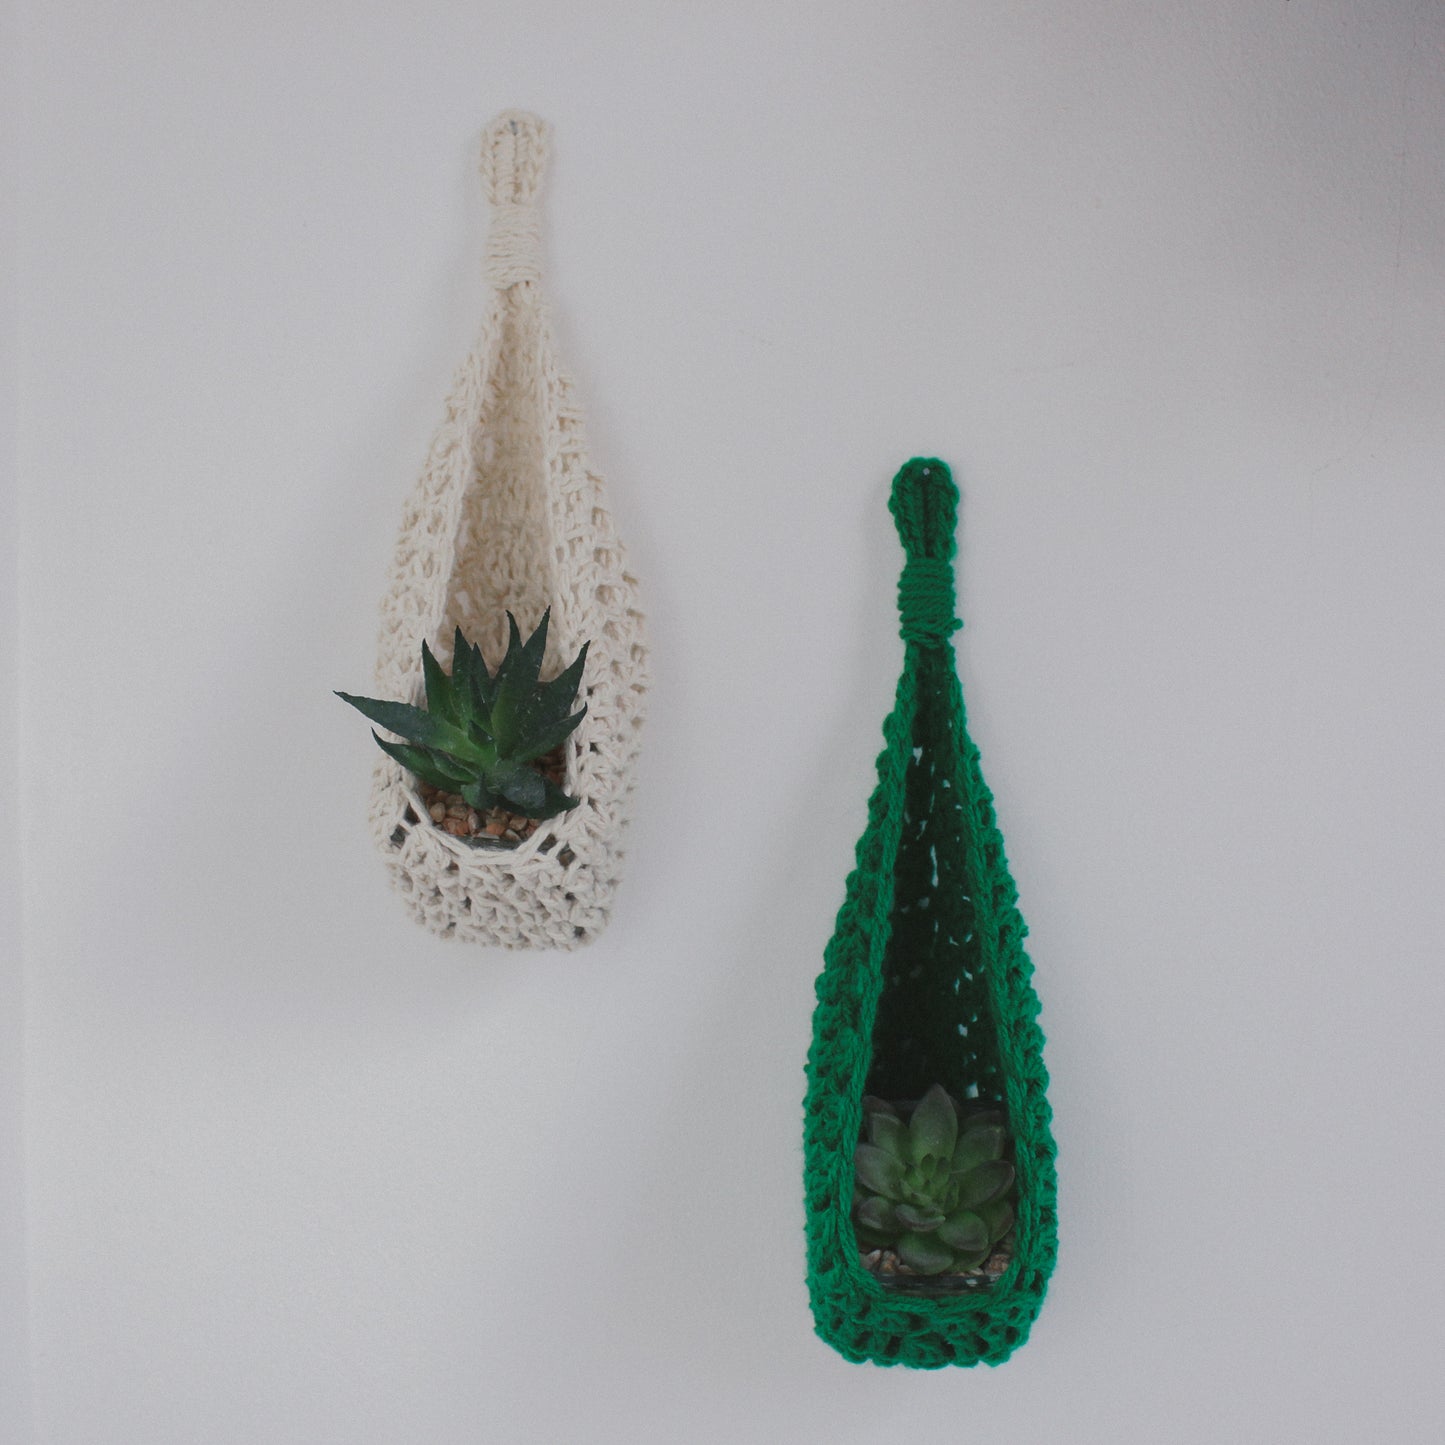 Crochet Hanging Basket Written Pattern, crochet plant hanging basket pattern, crochet pattern, crochet, Brunaticality